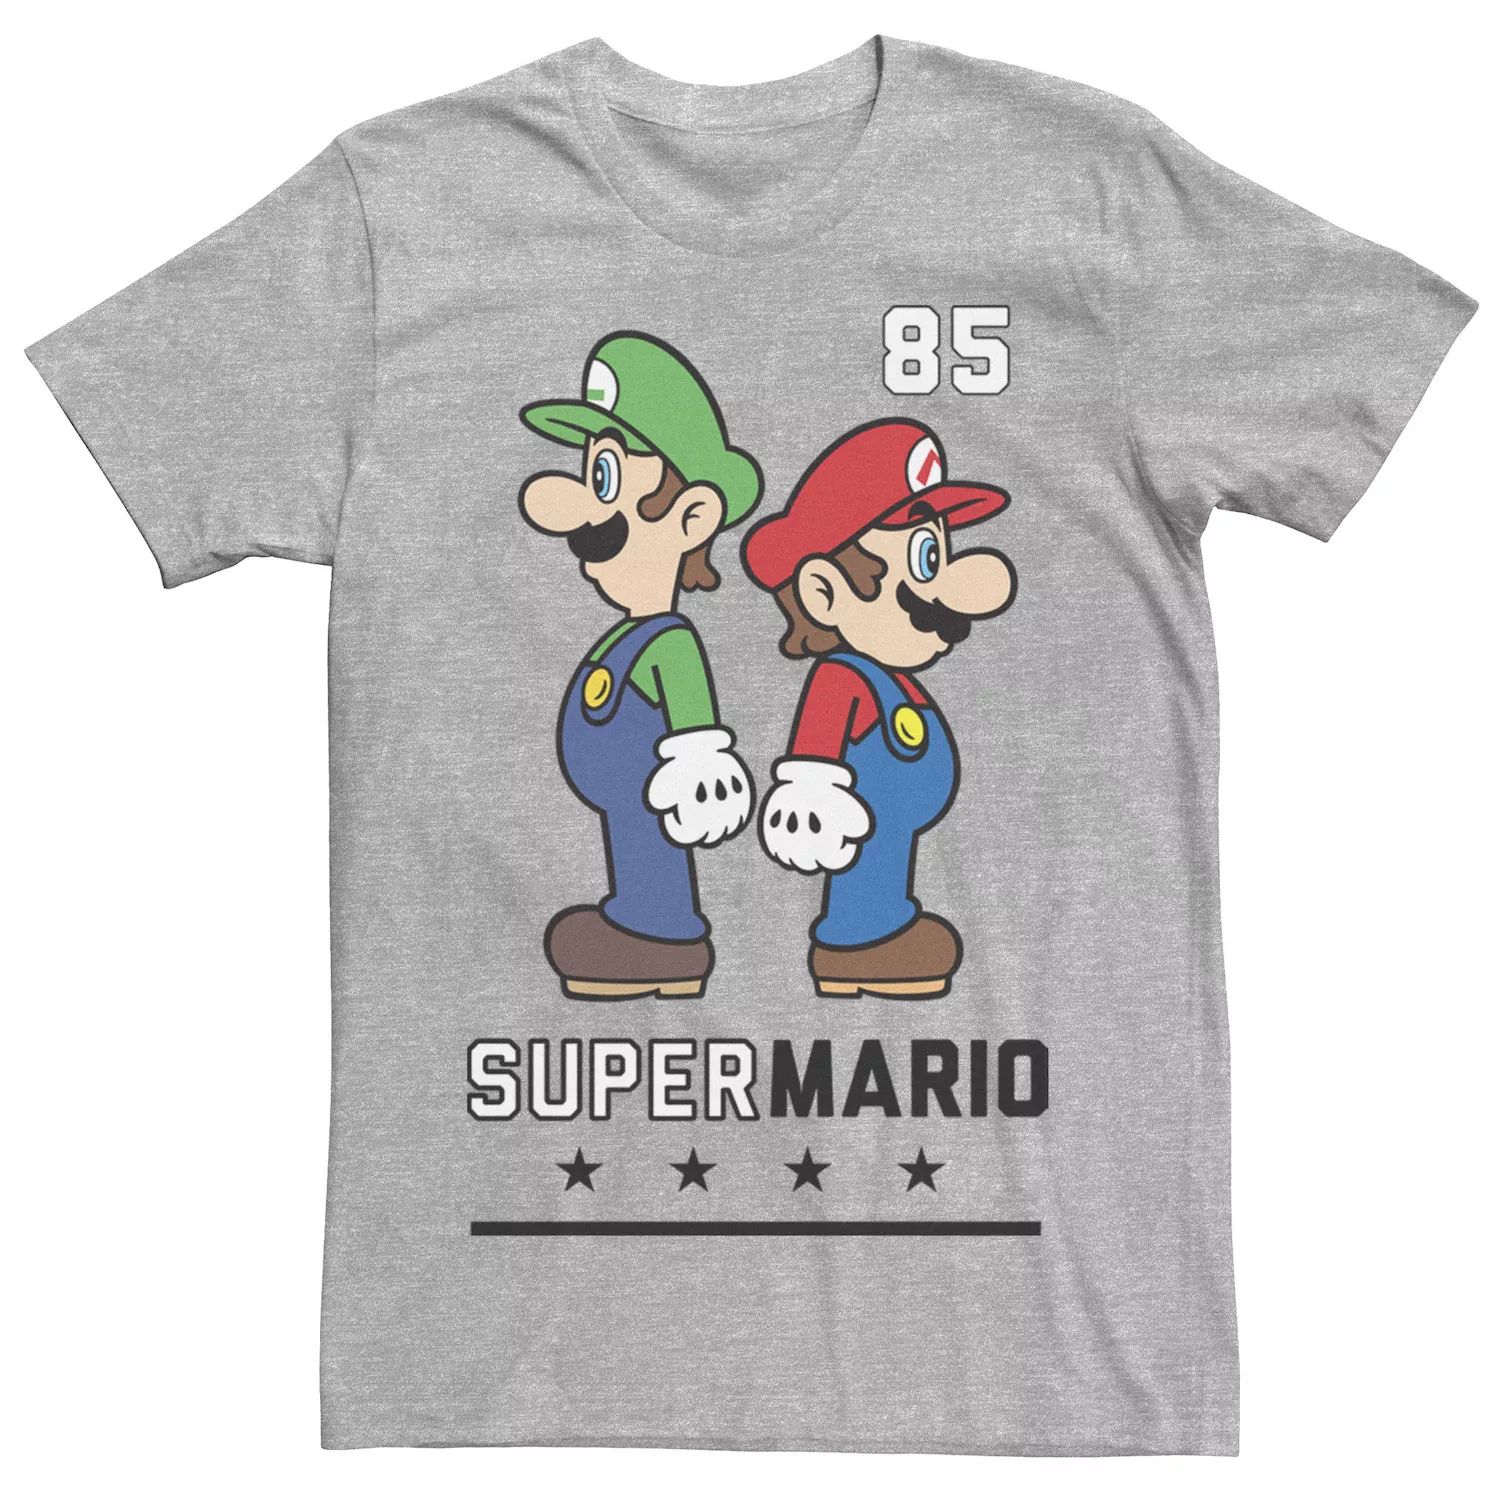 Мужская футболка с рисунком Nintendo Super Mario Luigi Back to Back Athletic 85 Licensed Character